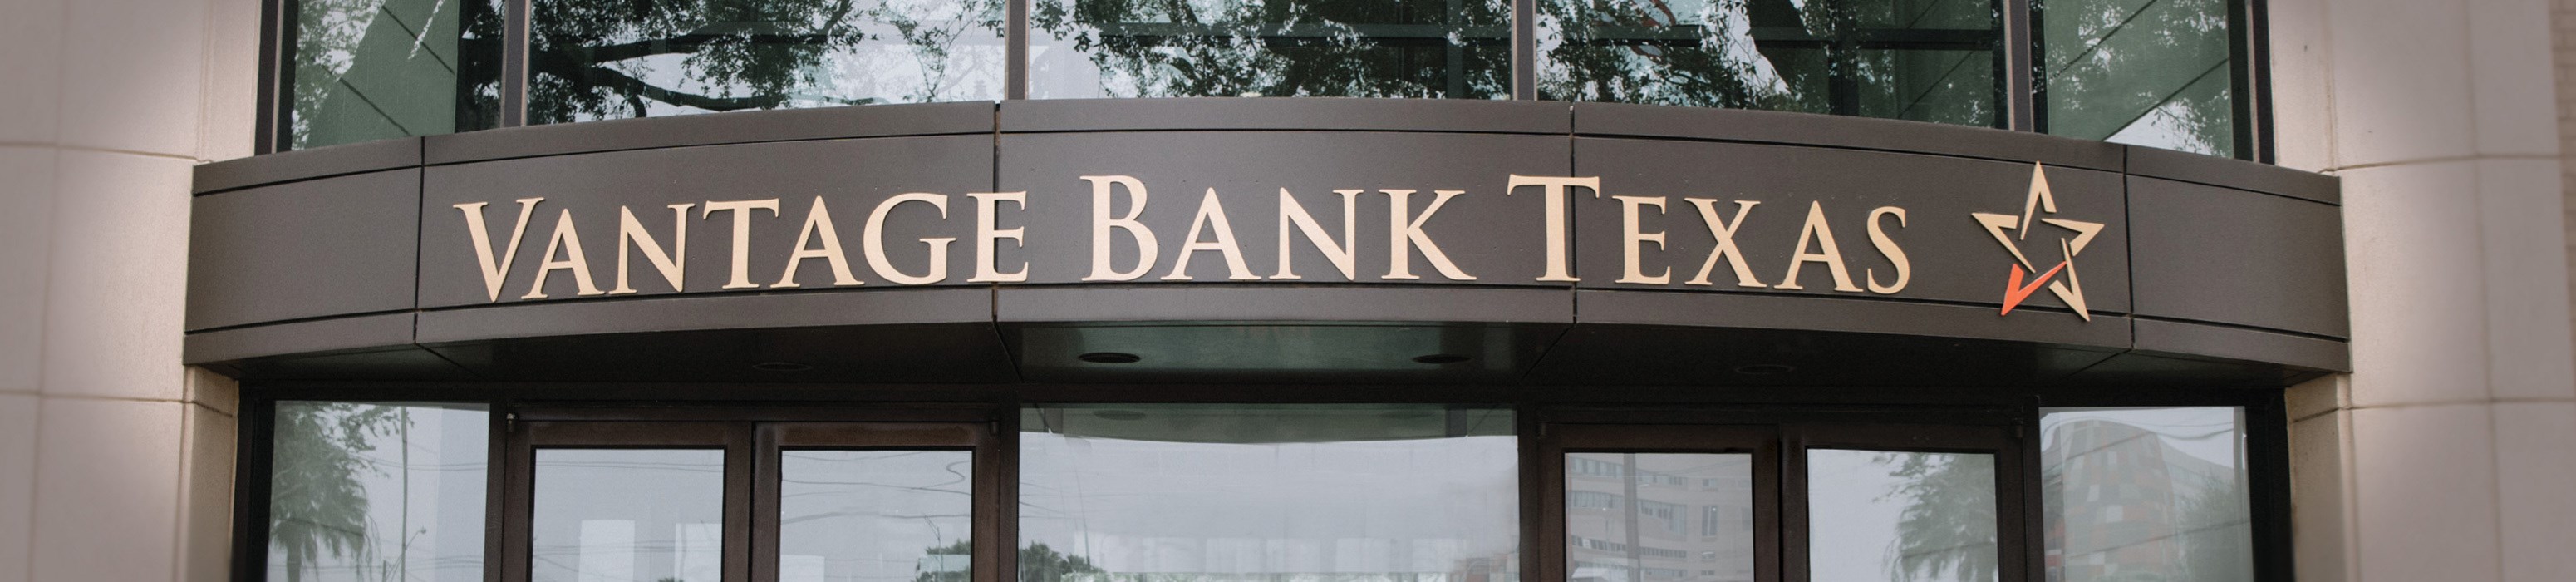 Vantage Bank Texas Signage on Building